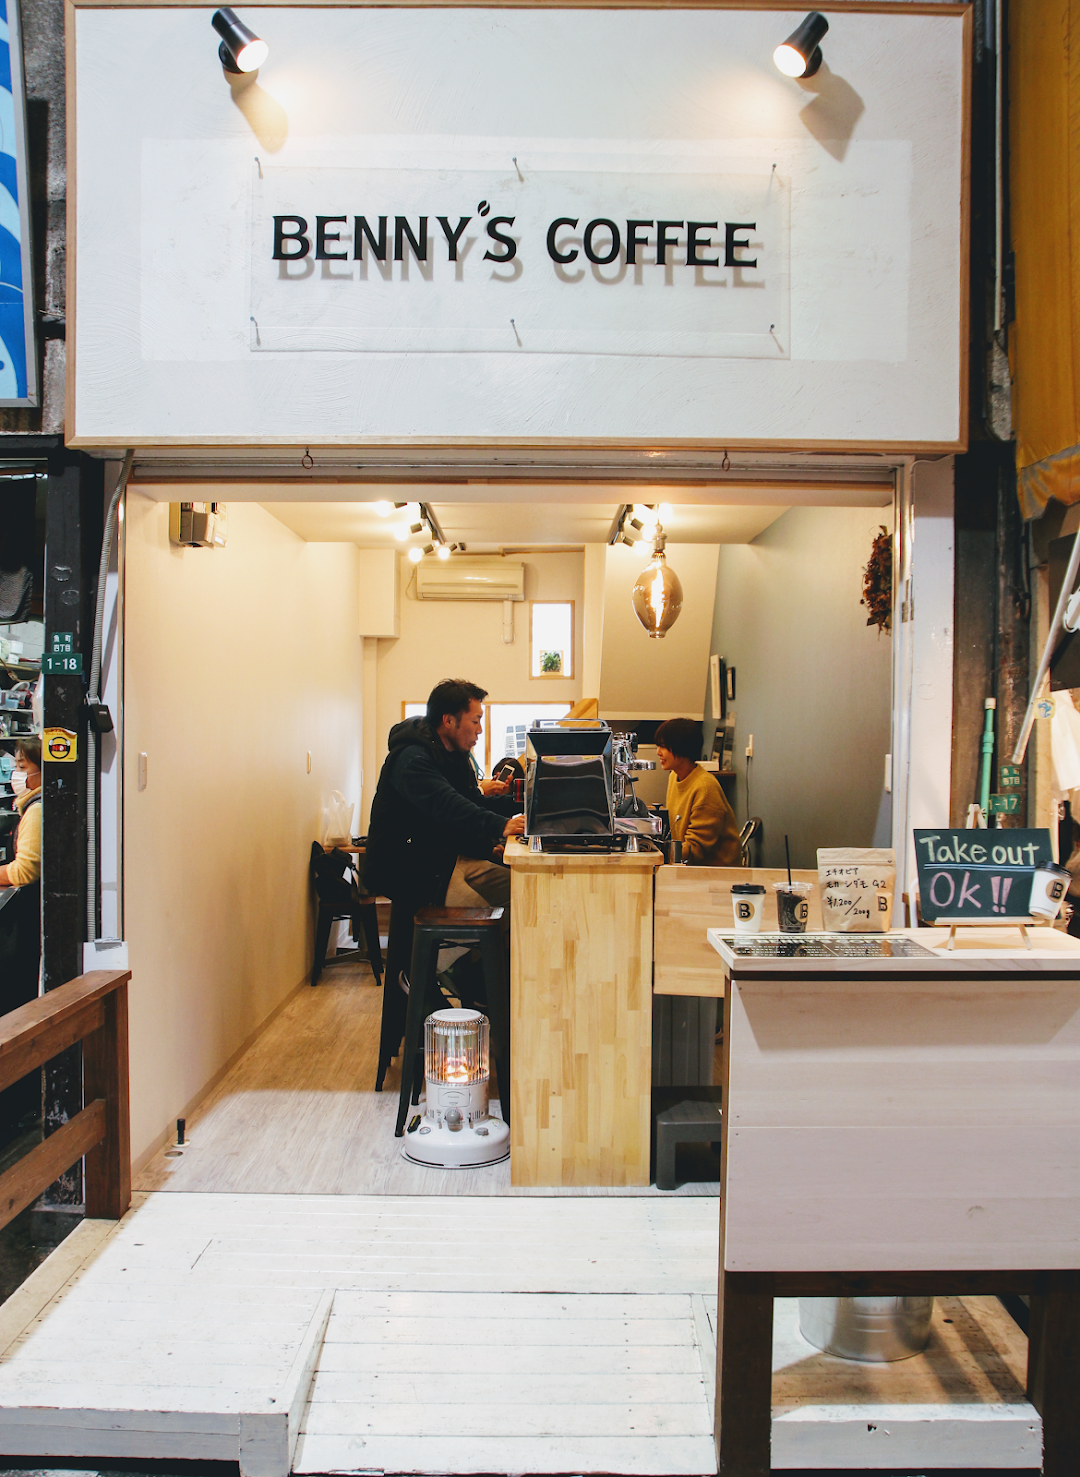 BENNYS COFFEE